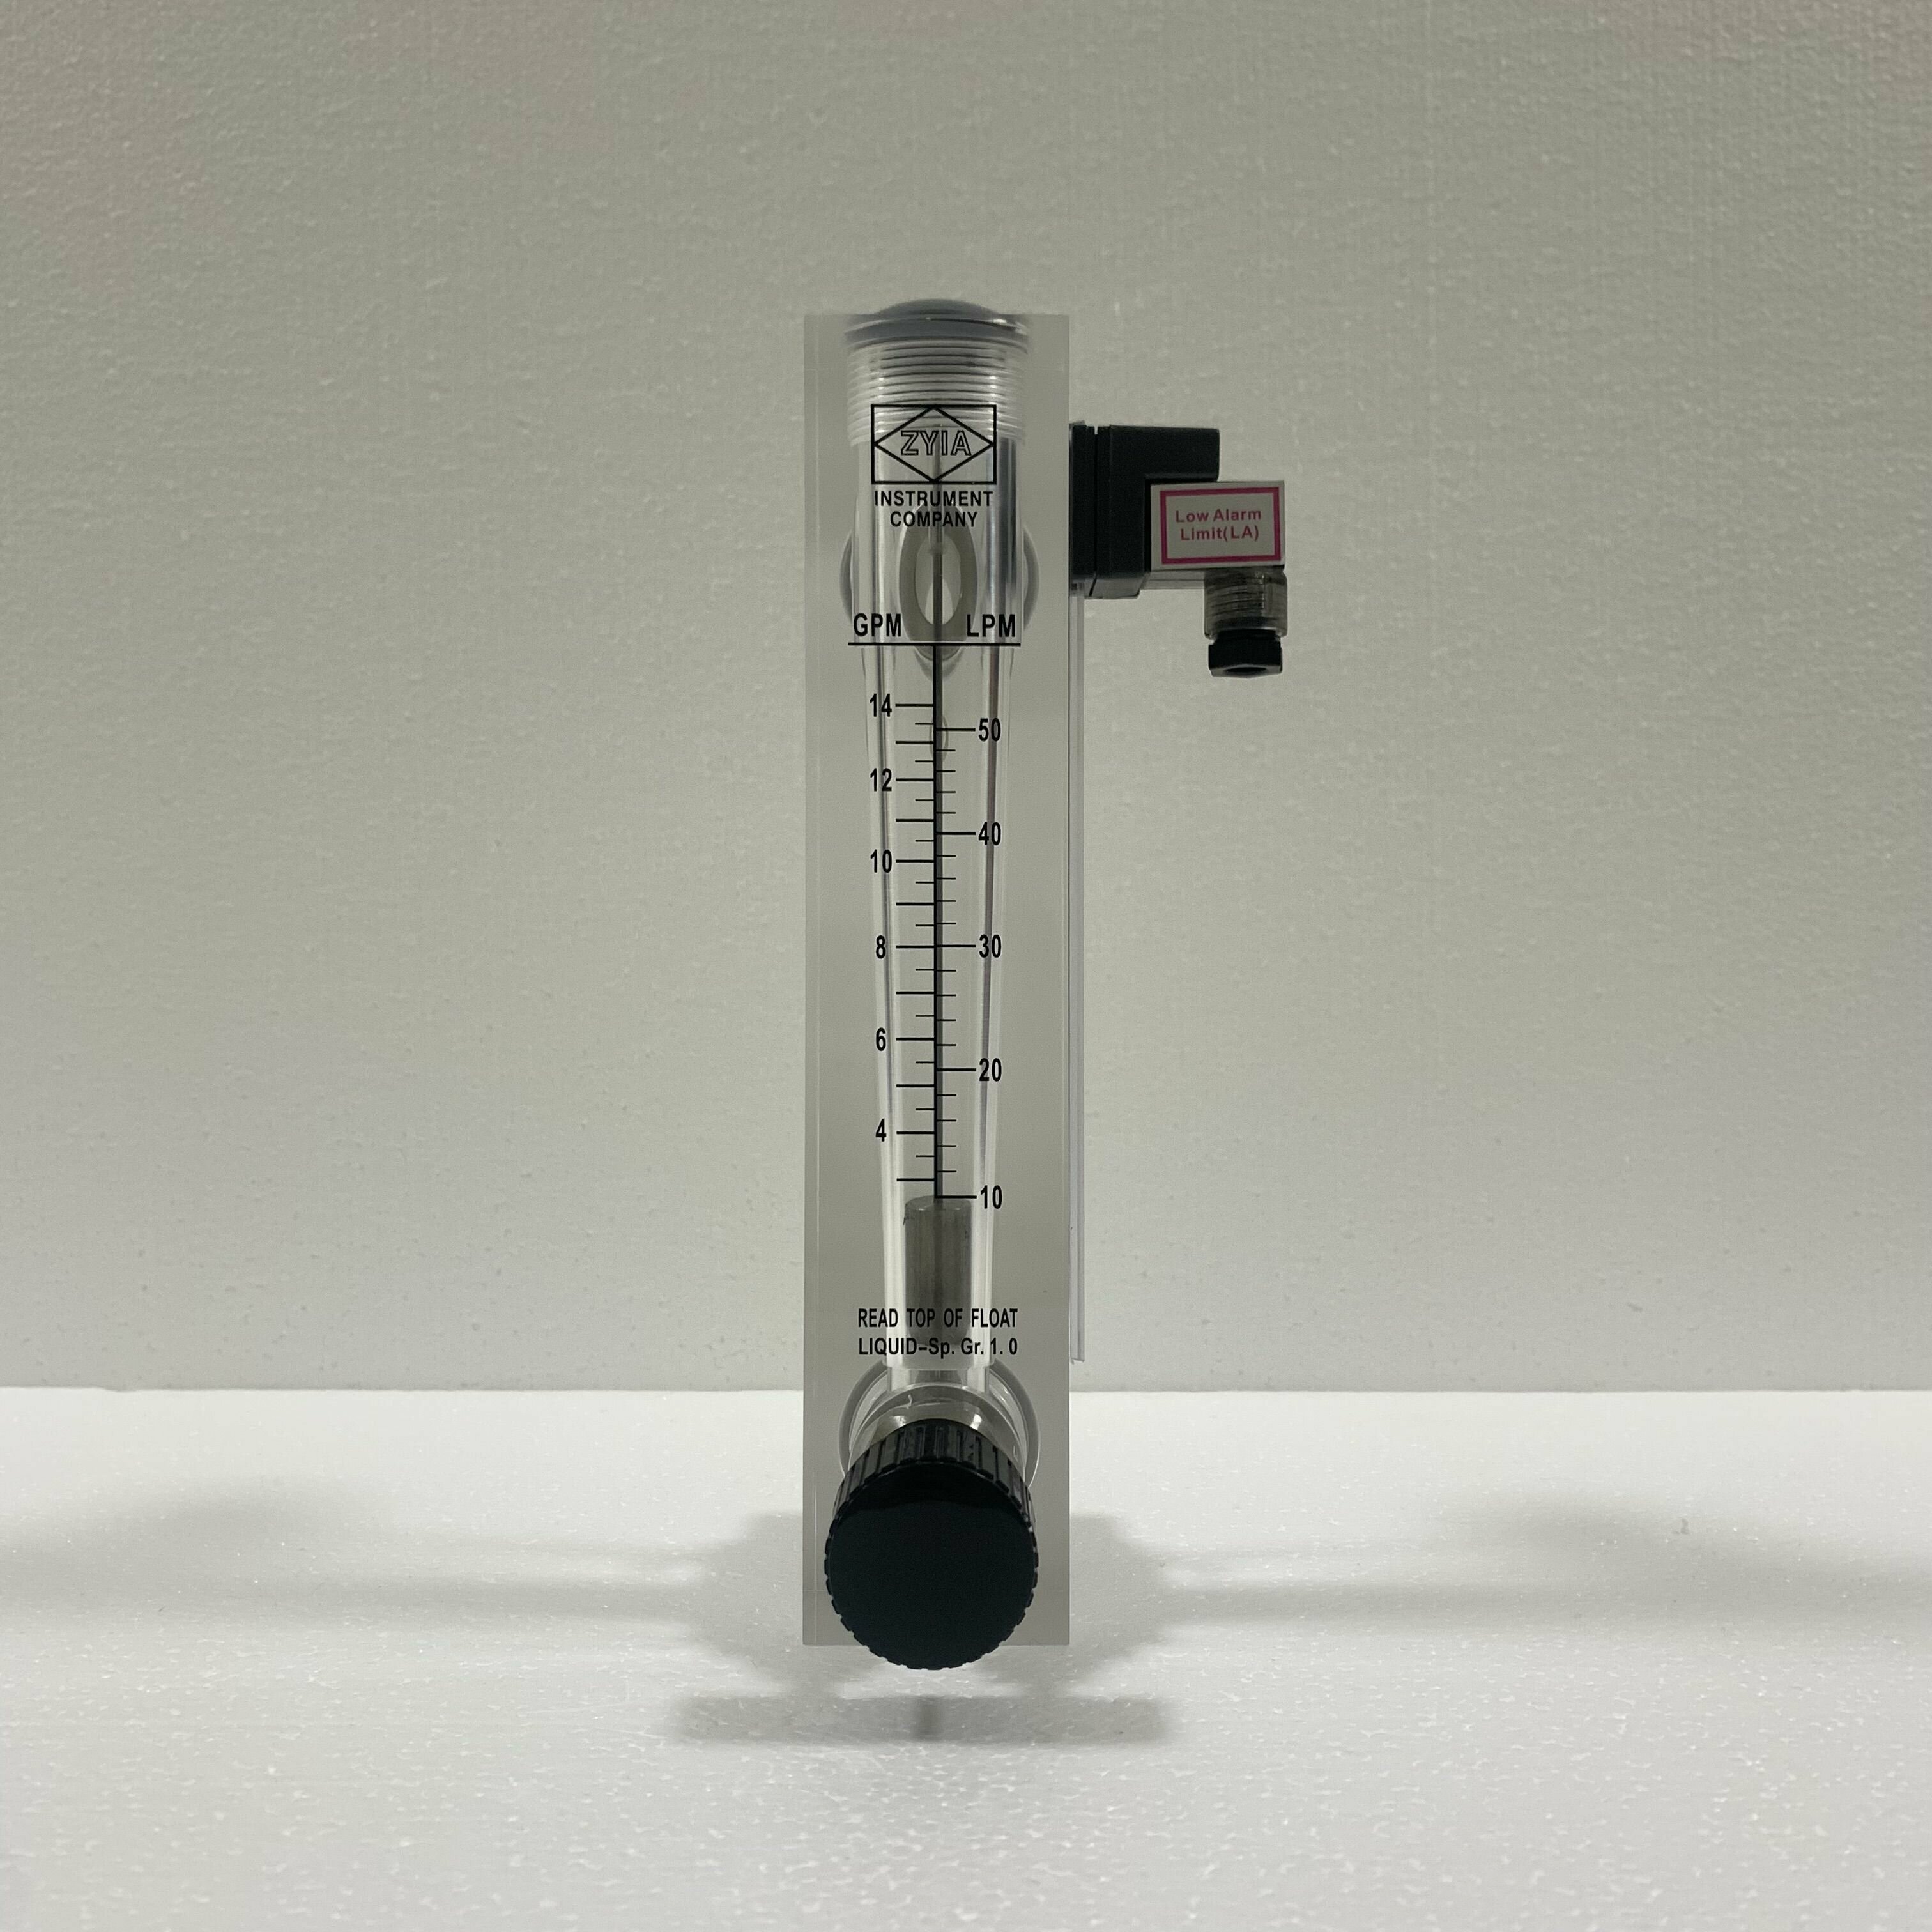 Ротаметр (расходомер) воды LZM-25ZT, диапазон измерения 10-50 л/мин (LPM)